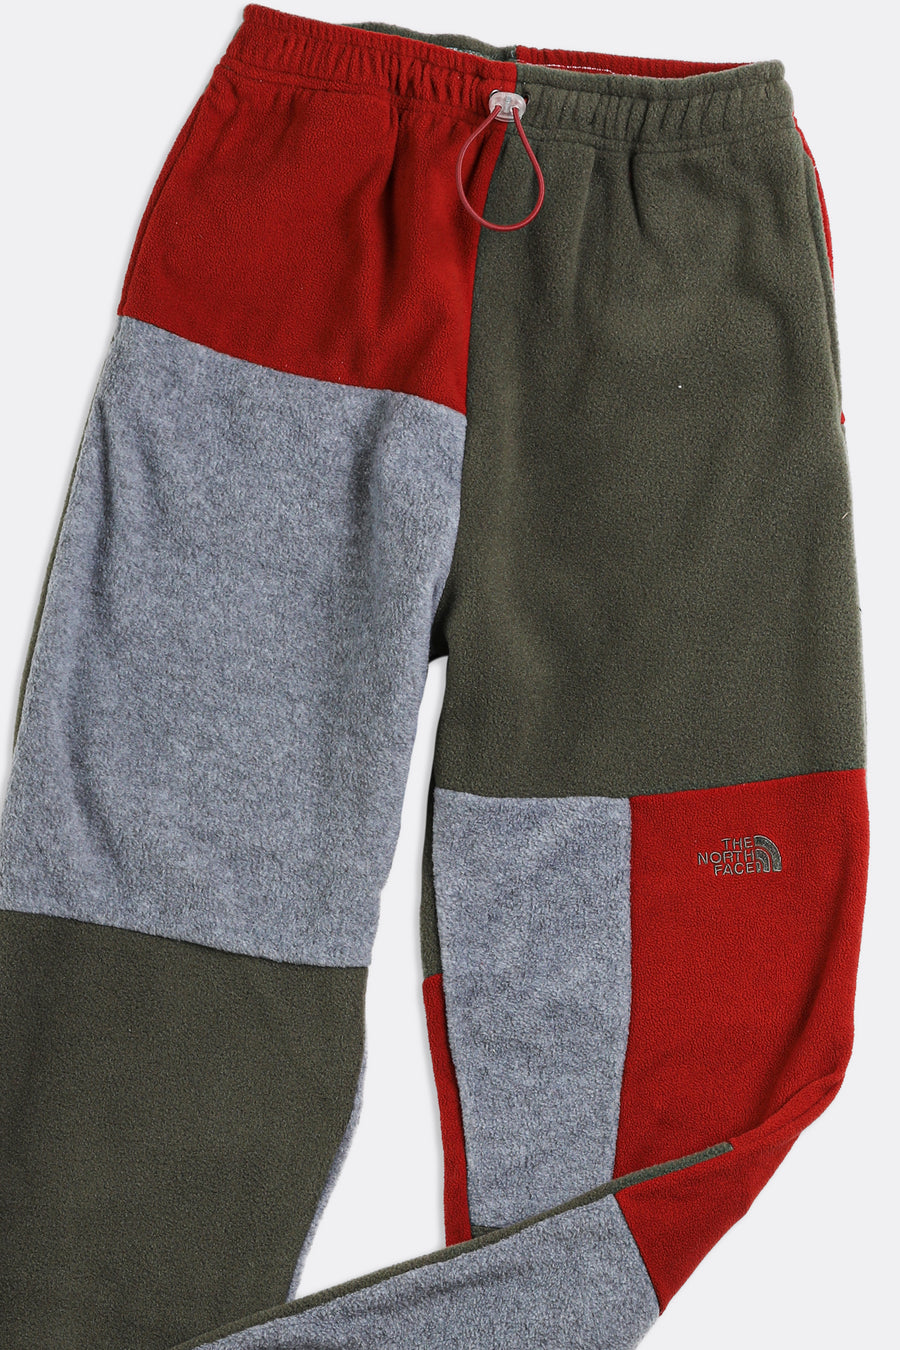 Unisex Rework North Face Patchwork Fleece Pant - Women-XS, Men-XXS